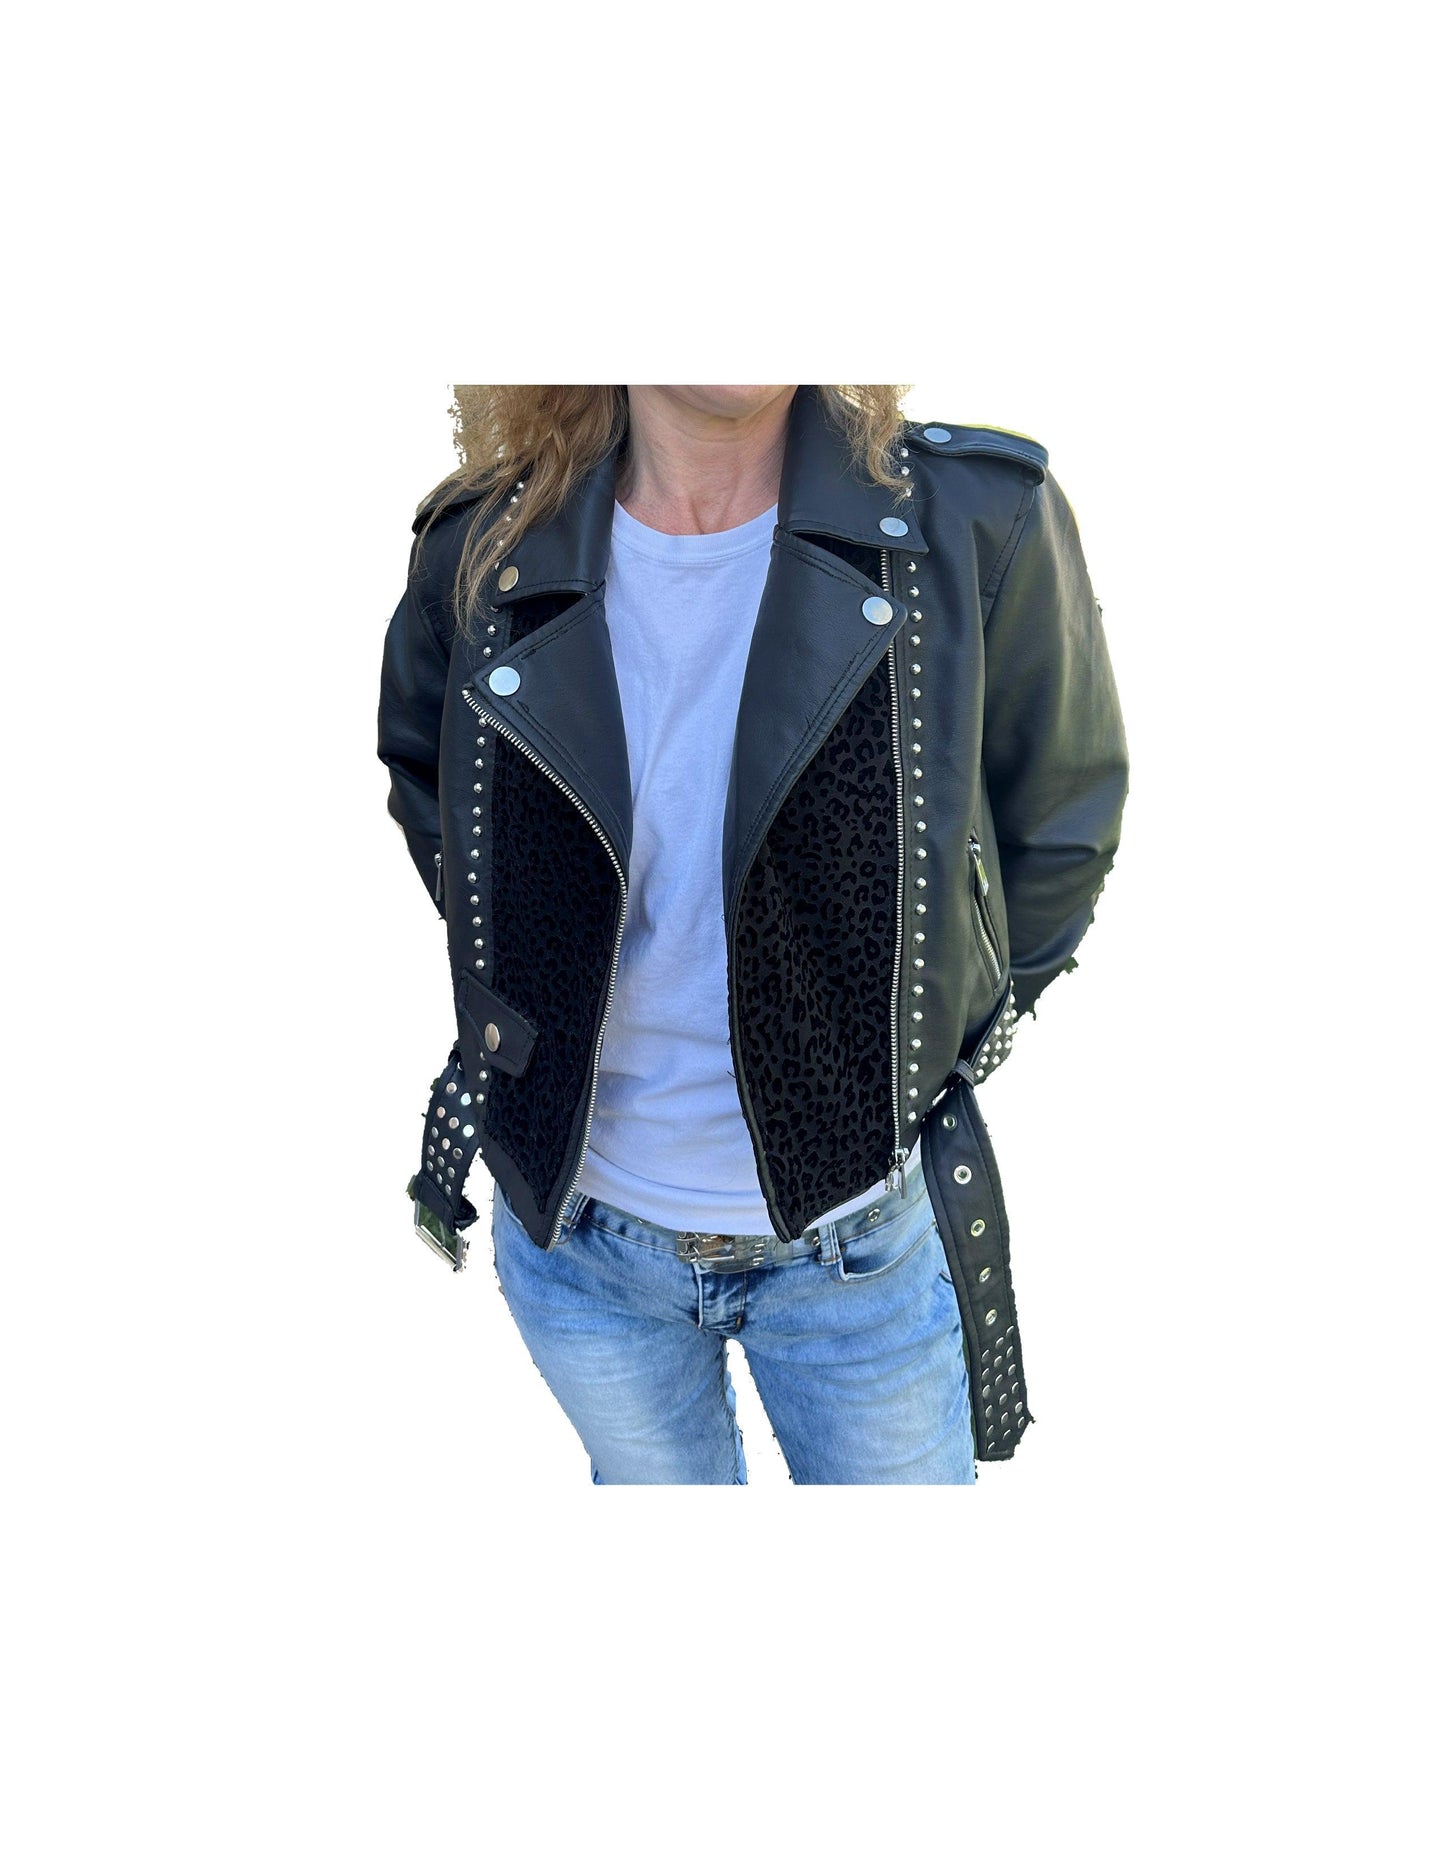 Women’s Black Printed Leather Biker Jacket